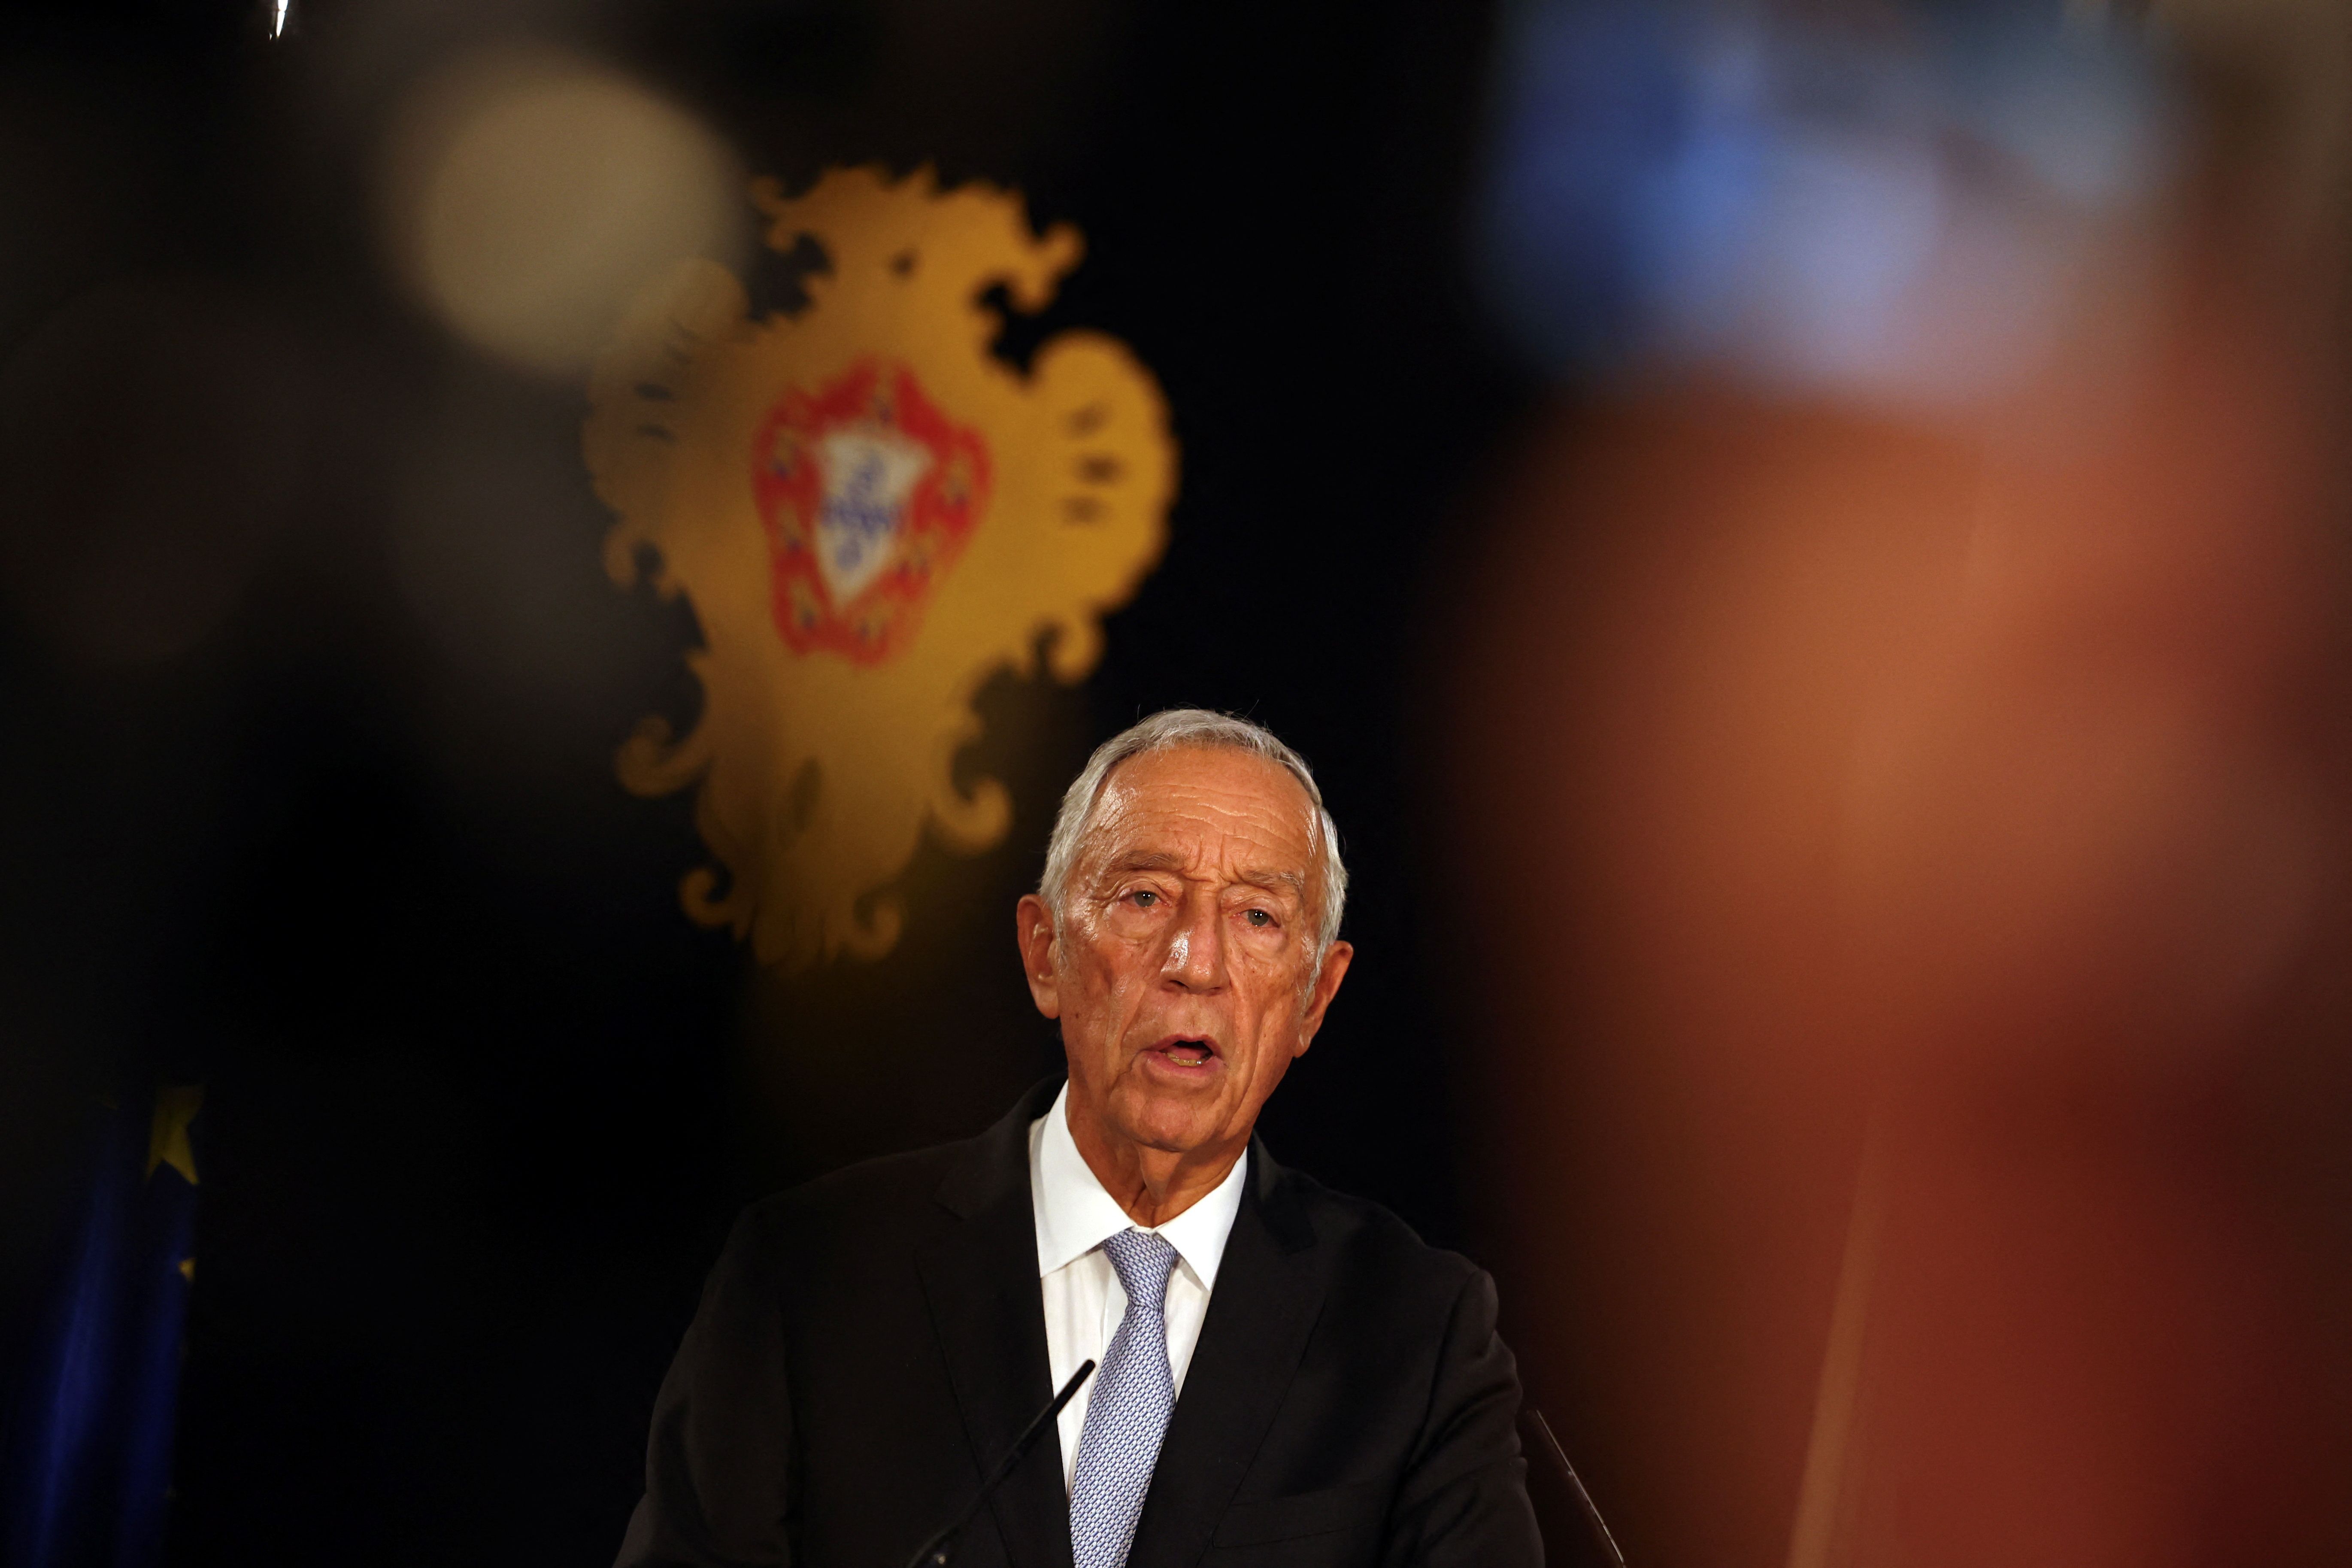 Presidente de Portugal sugere cancelamento de dívida para reparar legado colonial